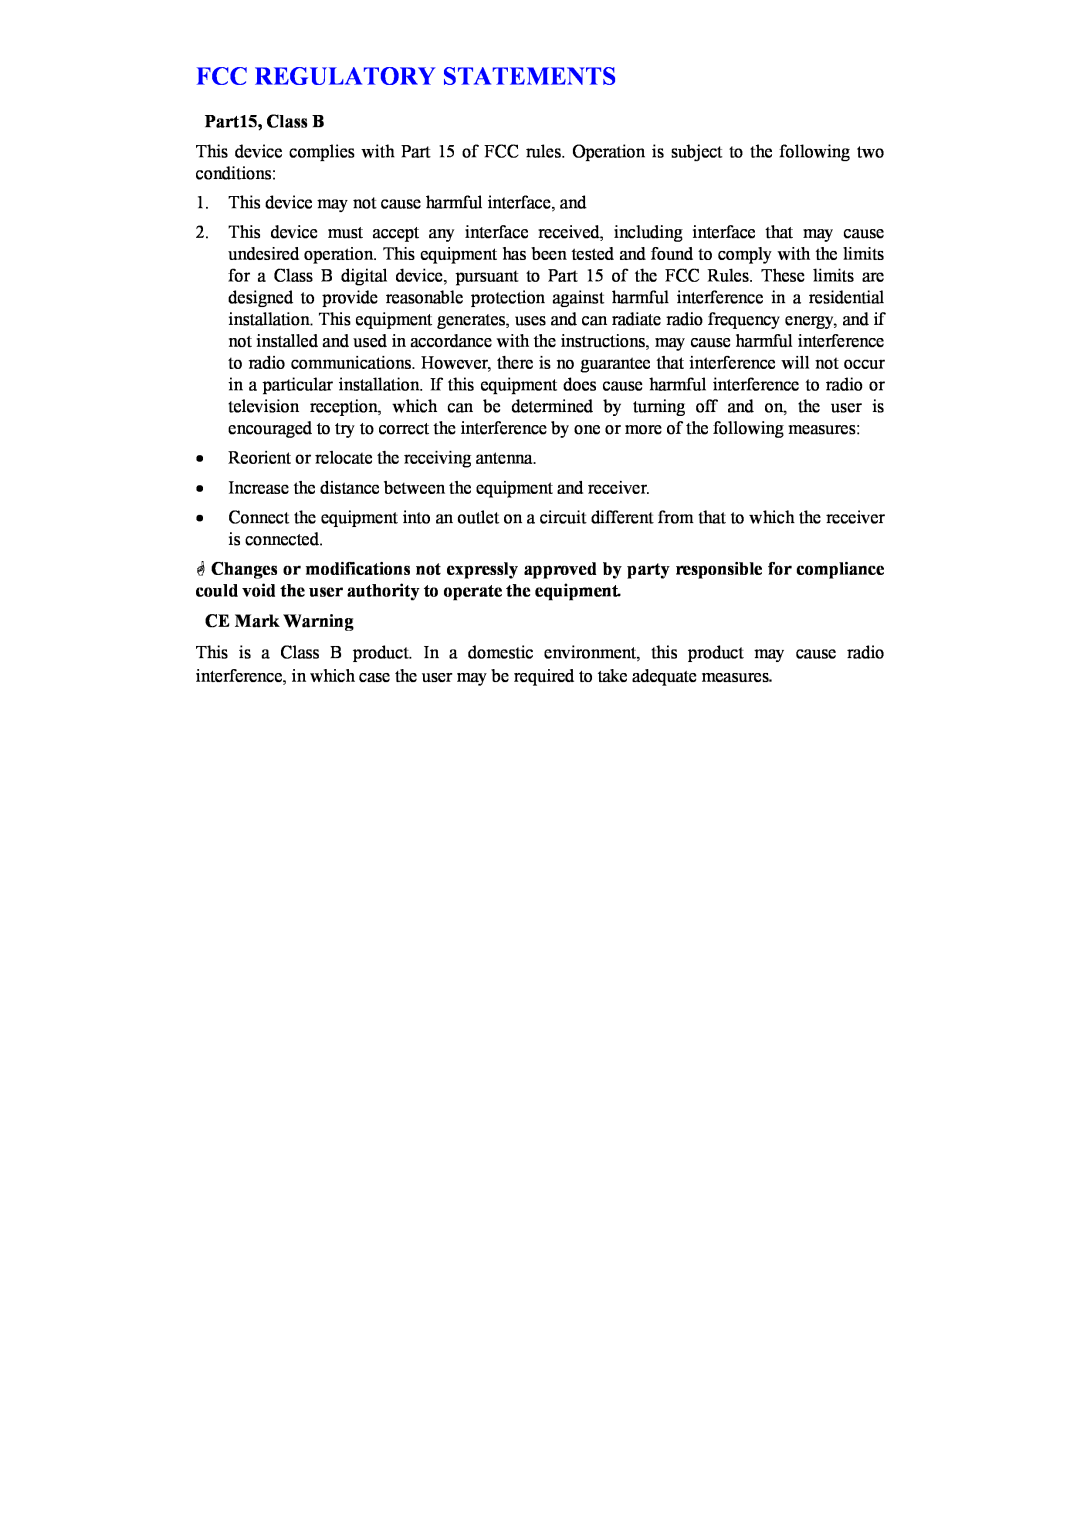 Abocom SW1600B manual Fcc Regulatory Statements, Part15, Class B, CE Mark Warning 